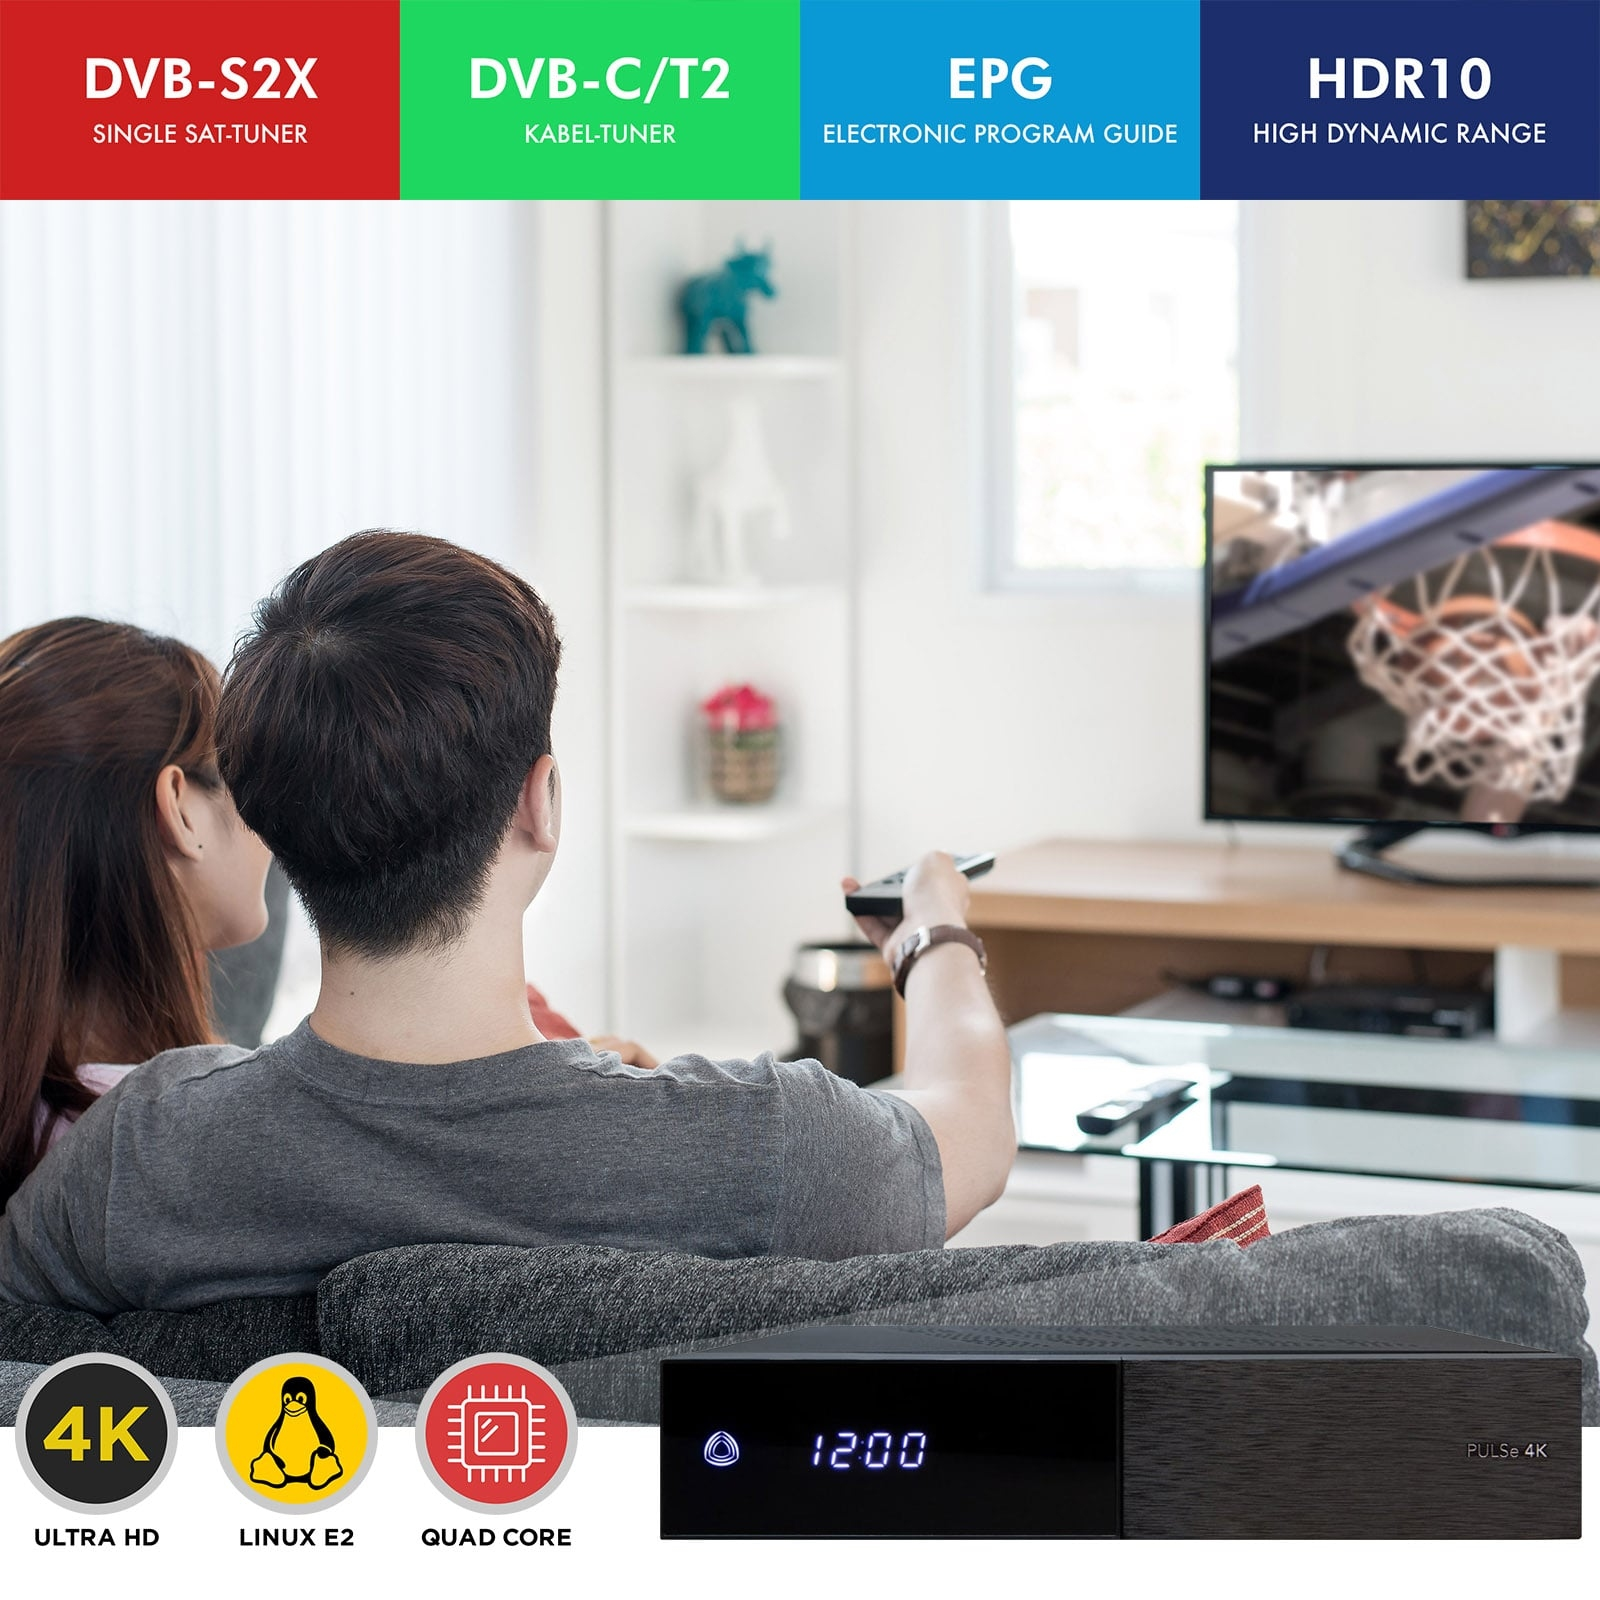 DVB-C/T2 DVB-S2X Tuner, 1TB Schwarz) 4K (PVR-Funktion, AB-COM Twin PULSe Sat-Receiver Combo